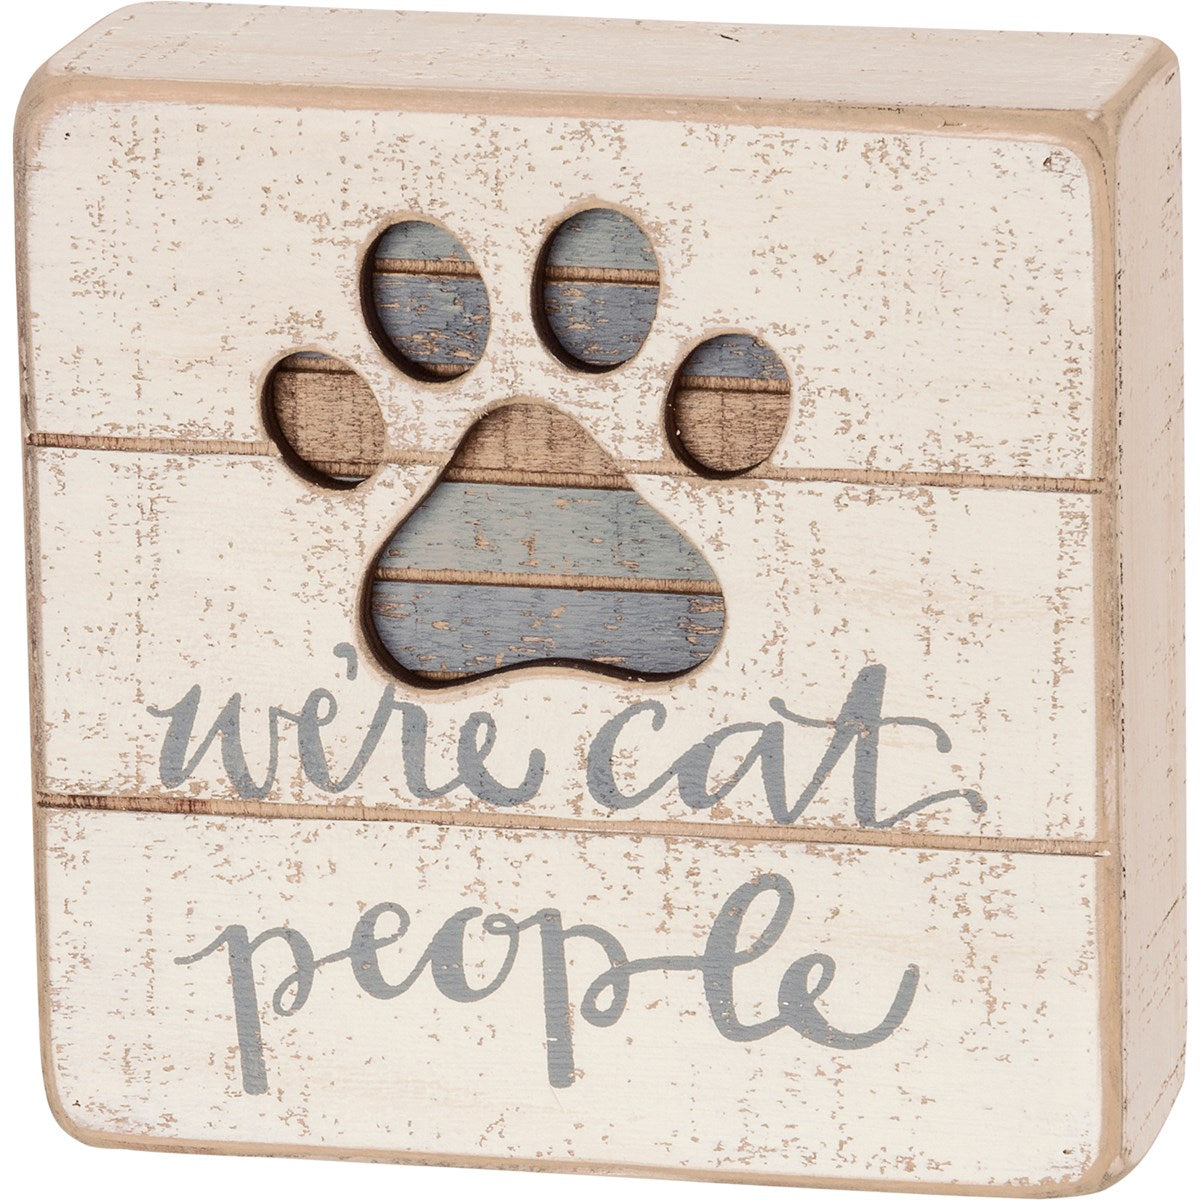 We're Cat People Slat Box Sign